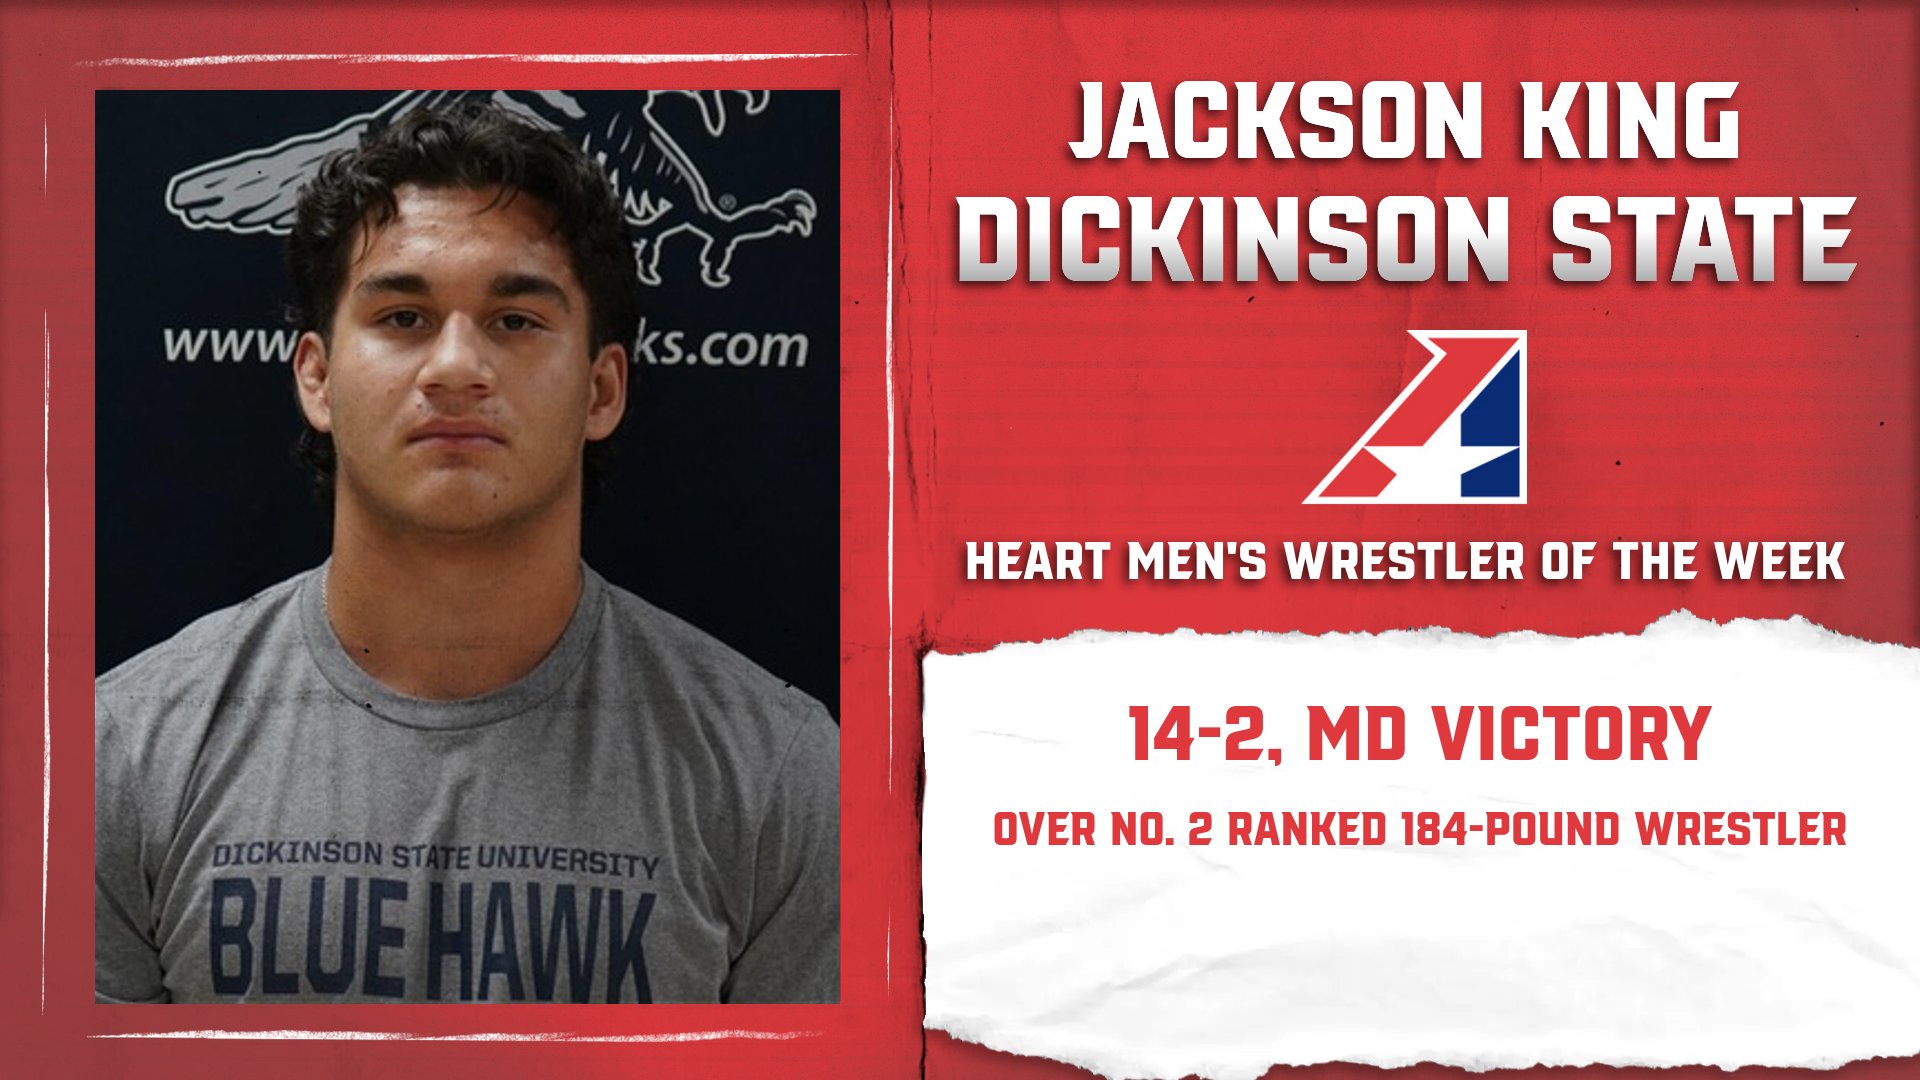 Jackson King of Dickinson State Earns Heart Men’s Wrestler of the Week